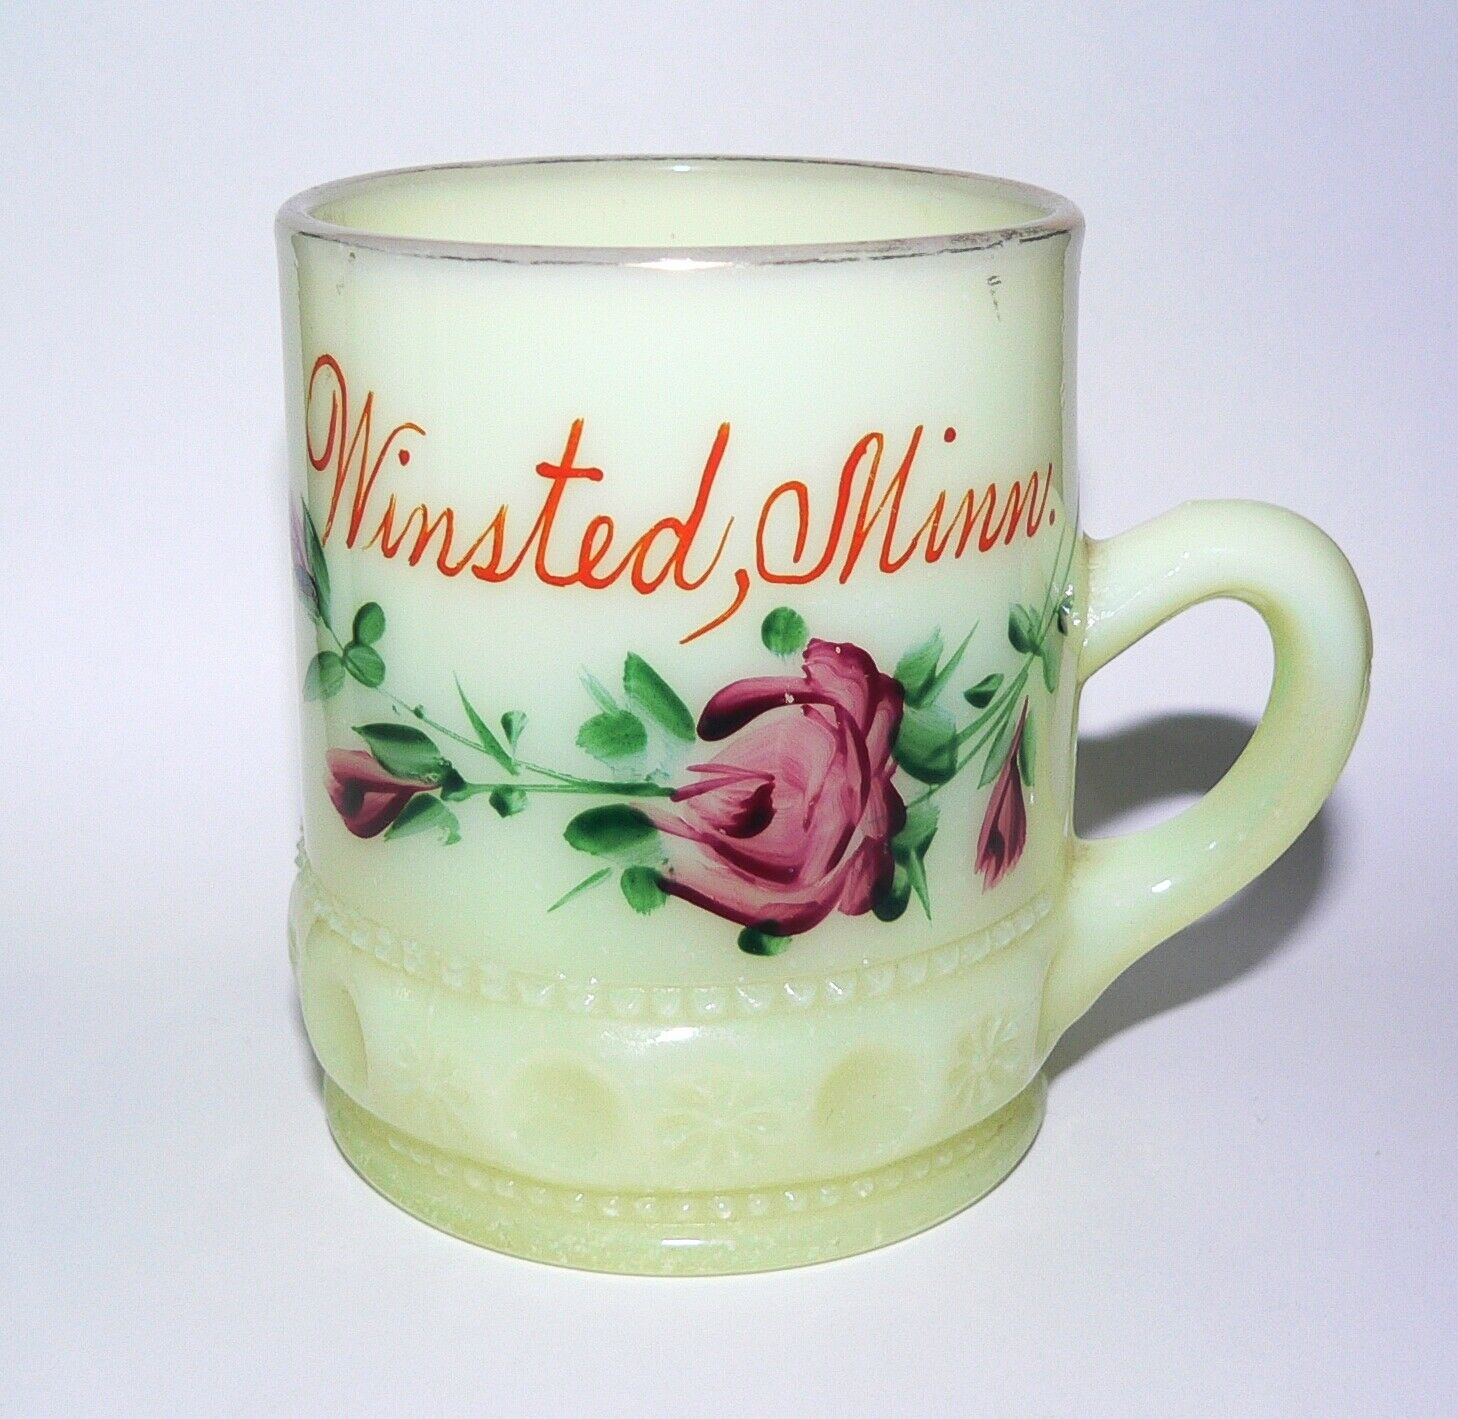 Winsted Minnesota Minn Mn Souvenir Custard Glass Cup Mug 1890-1910